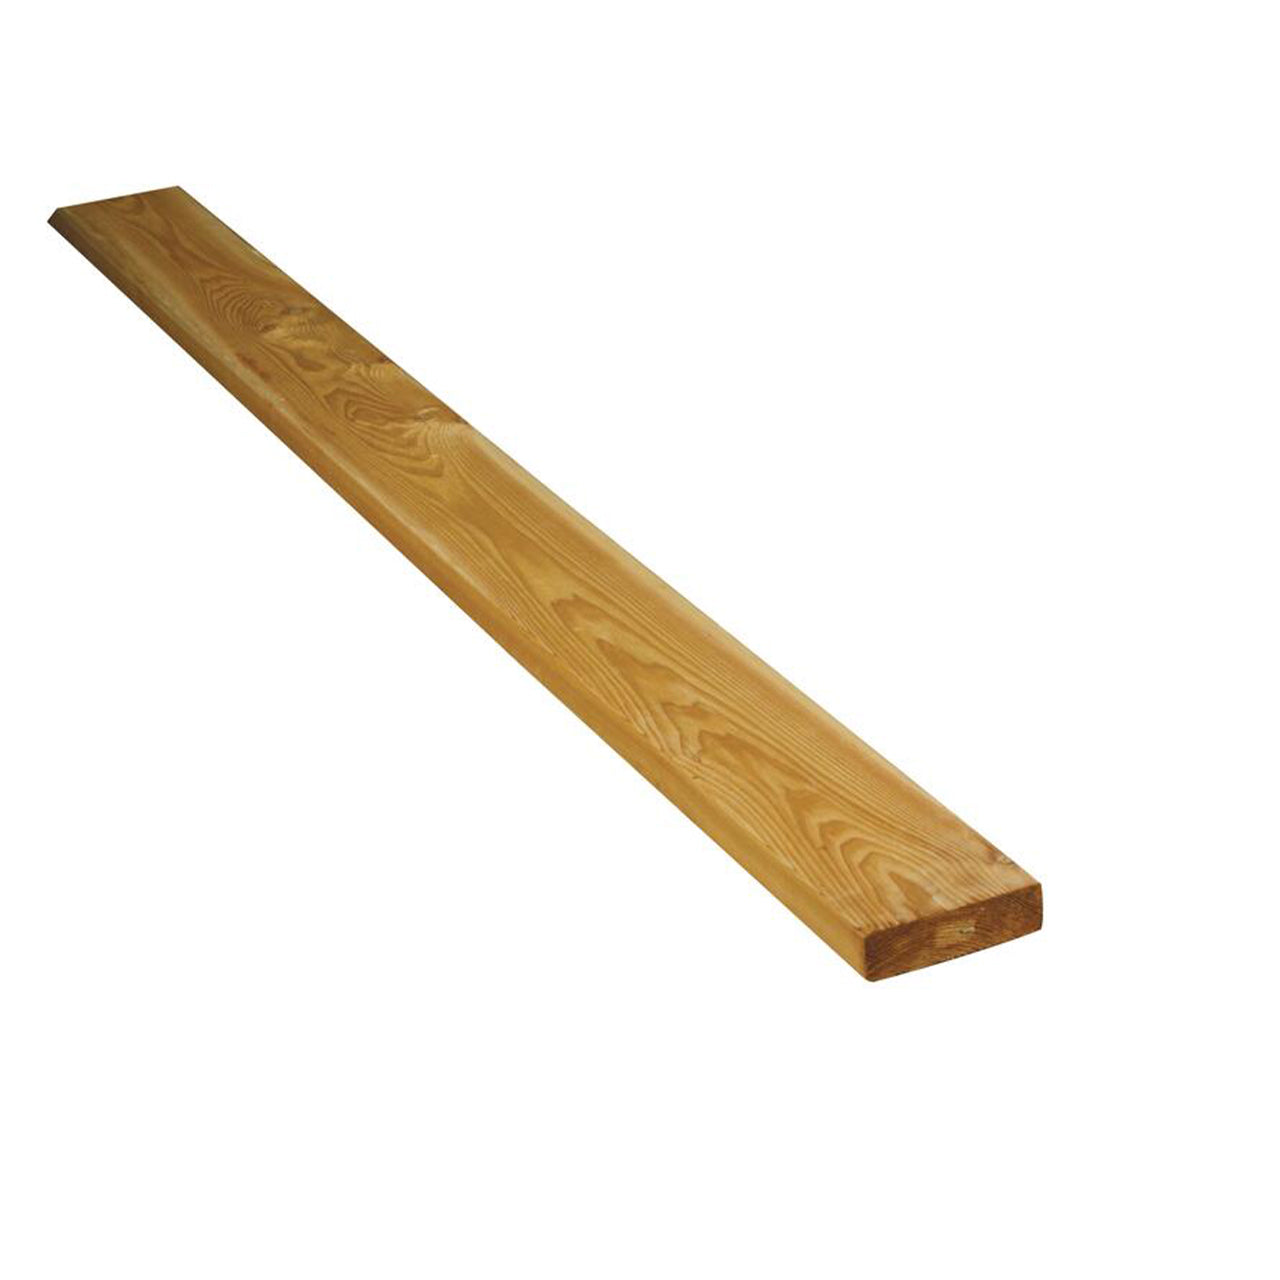 Cedar 2"x4' dimensional lumber